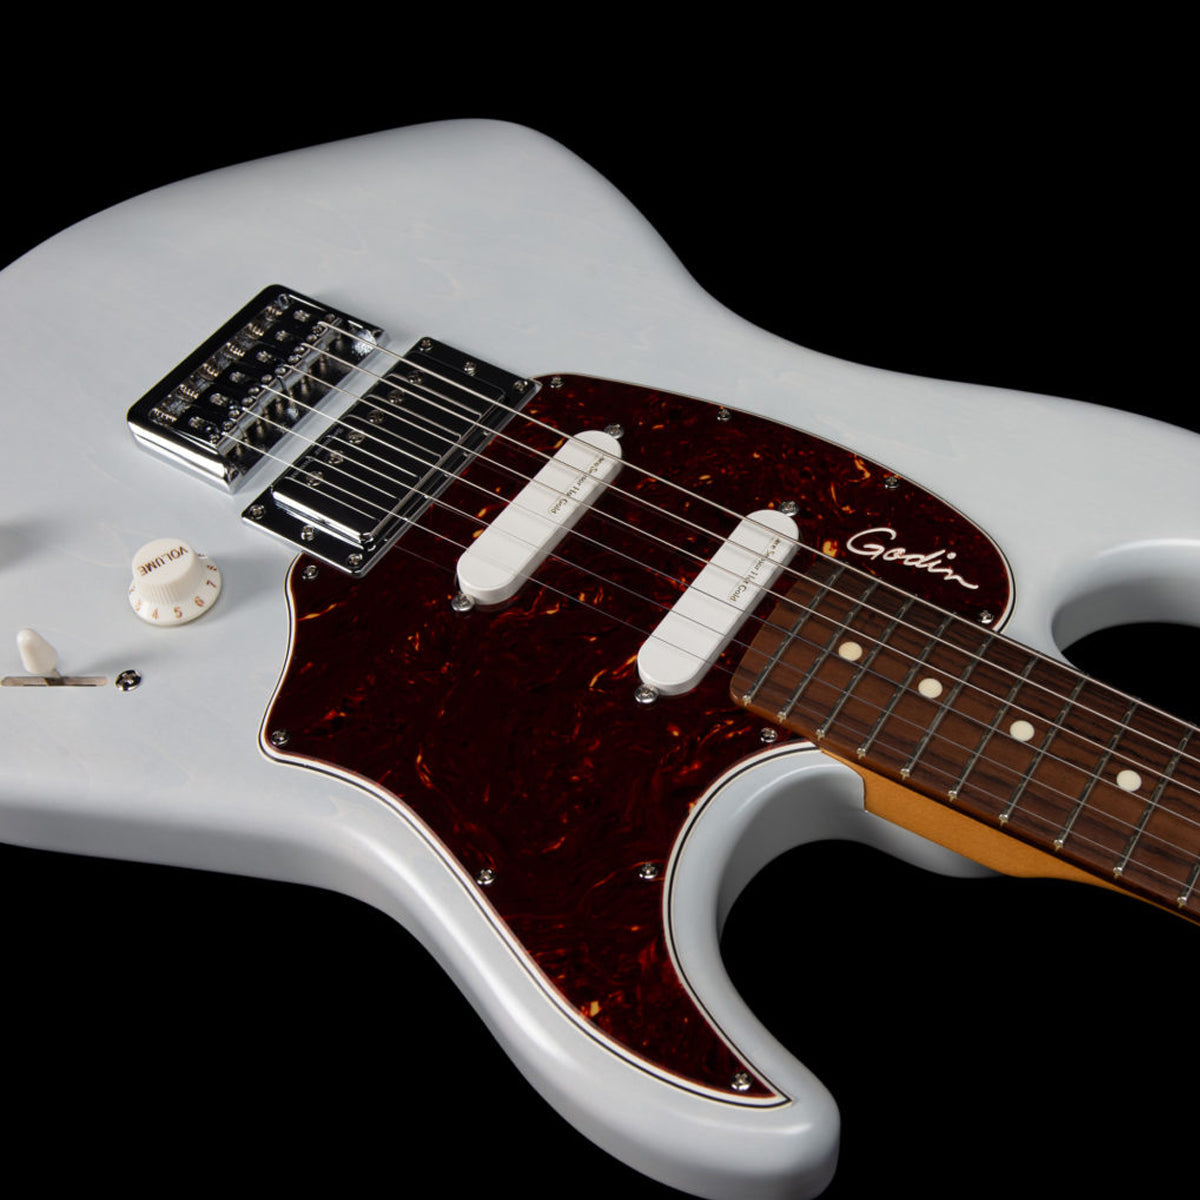 Godin Session RHT Pro Electric Guitar ~ Carbon White, Electric Guitar for sale at Richards Guitars.